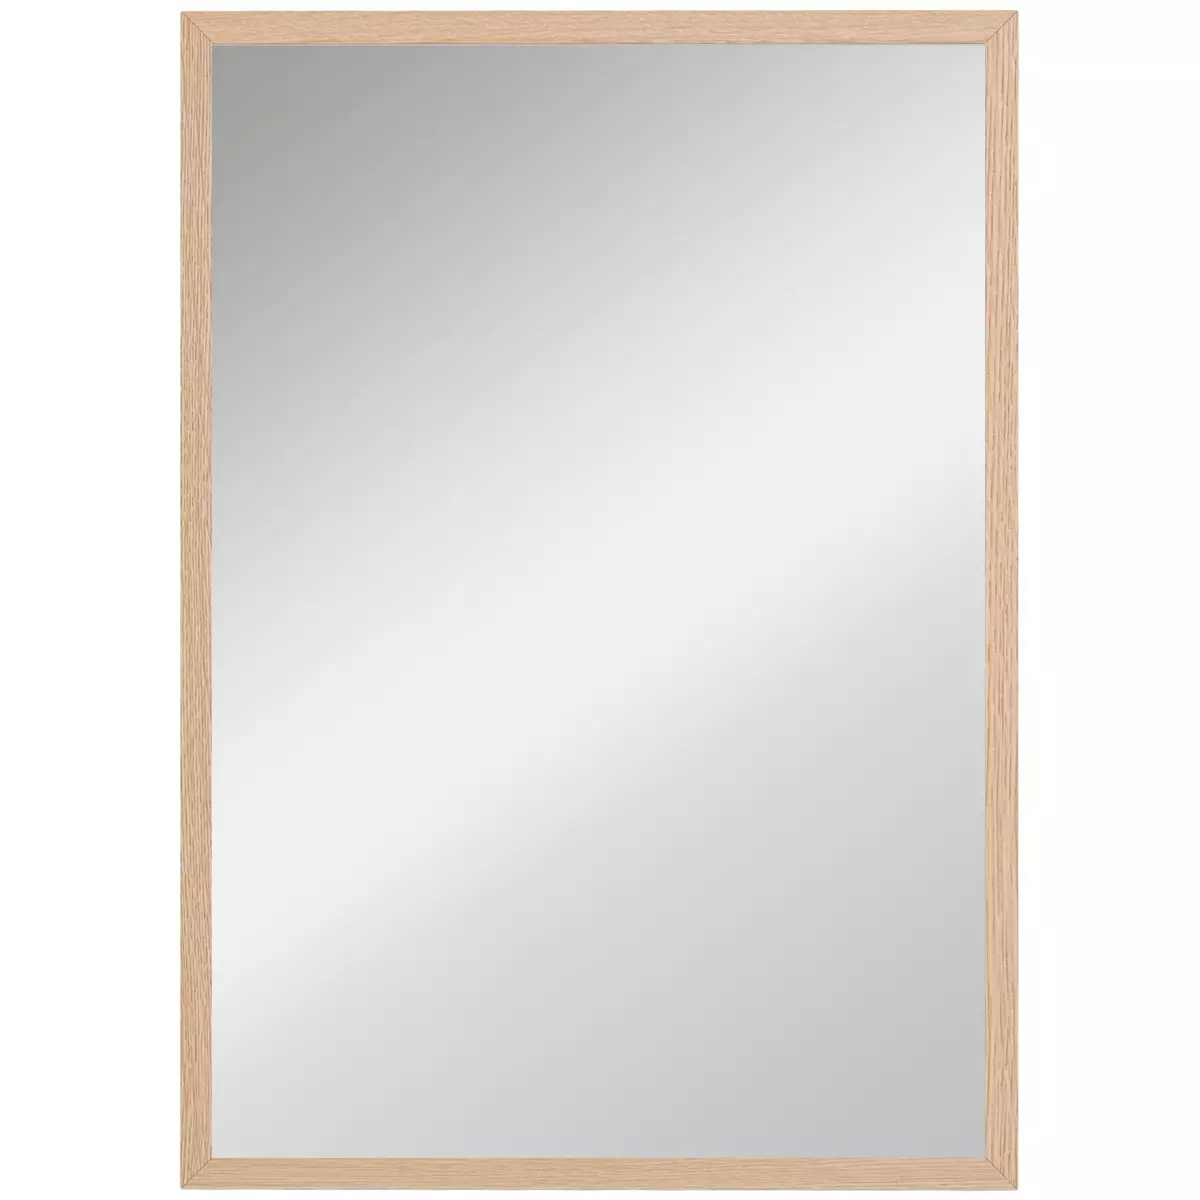 HOMCOM Miroir mural rectangulaire dim. 50L x 70H cm cadre MDF aspect bois clair